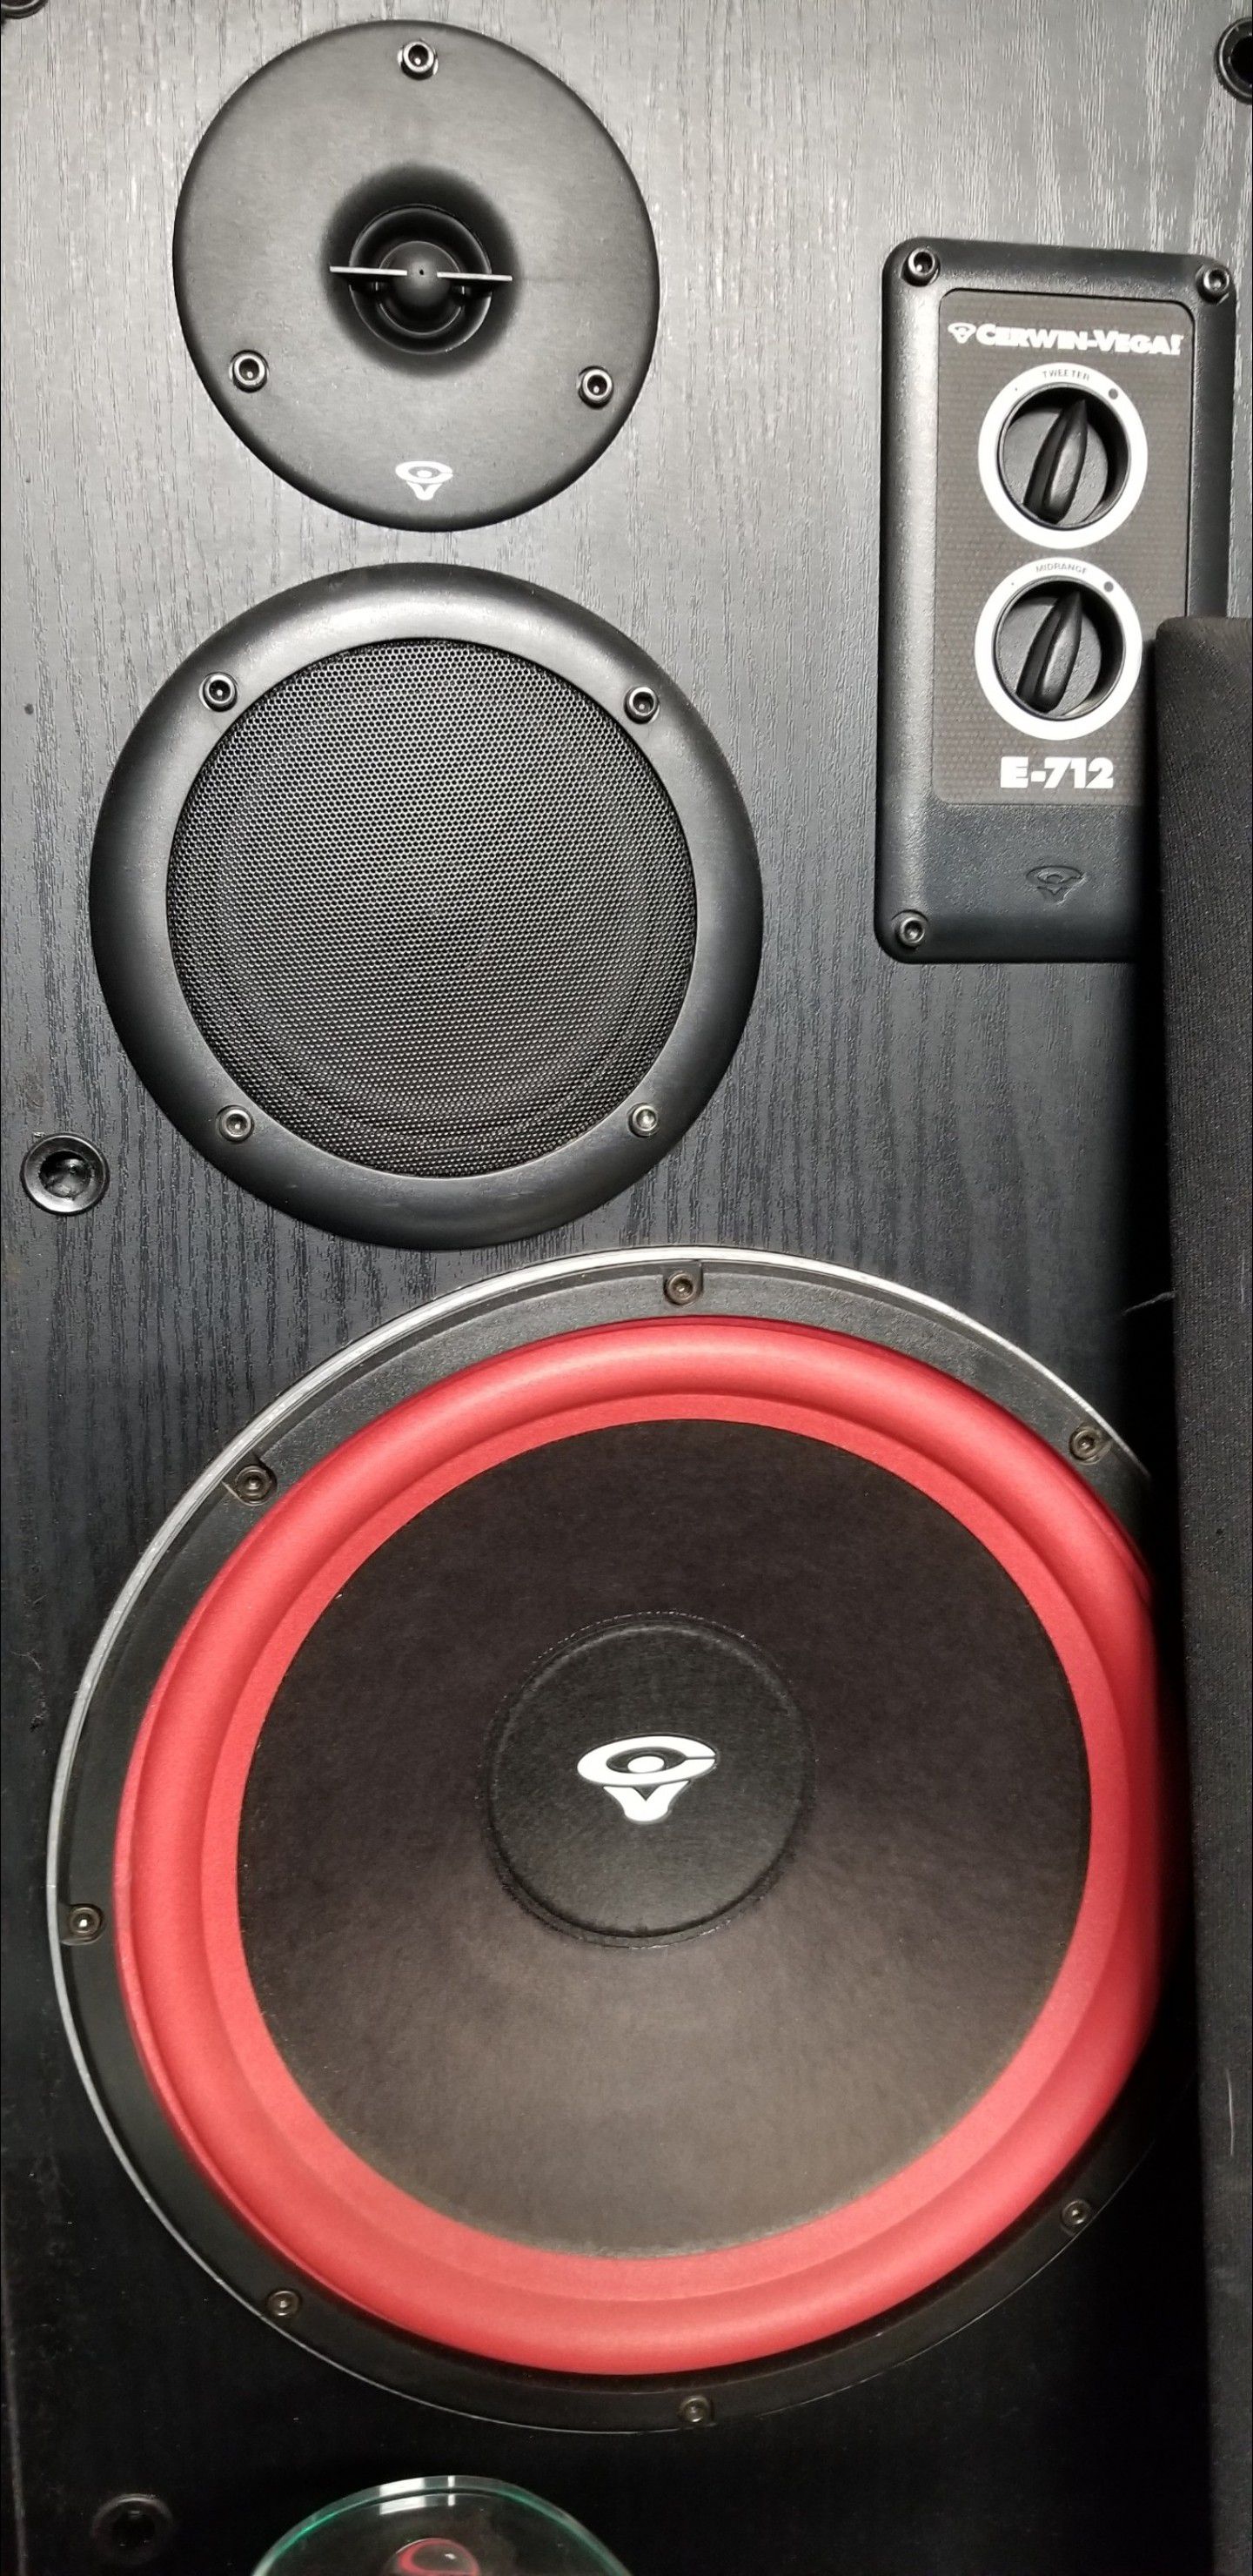 Cerwin vega E-712 speakers